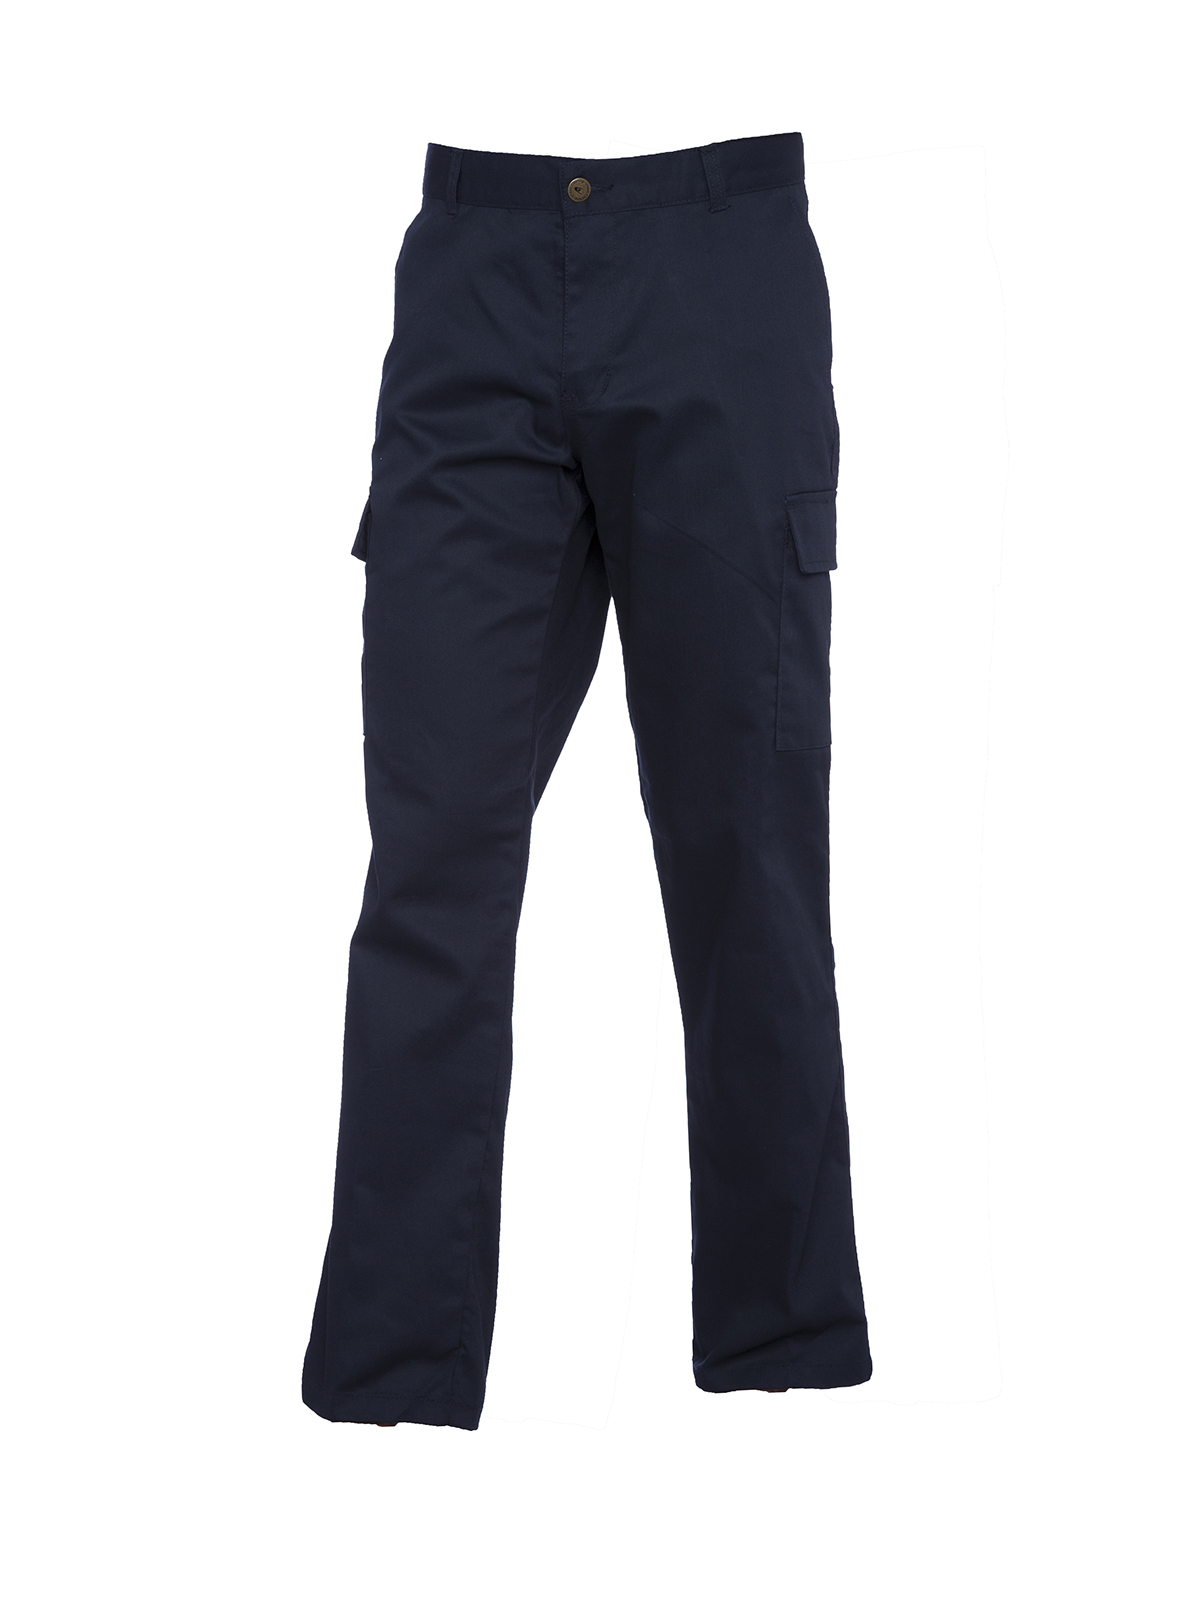 Ladies Cargo Trousers, Navy - Size 18